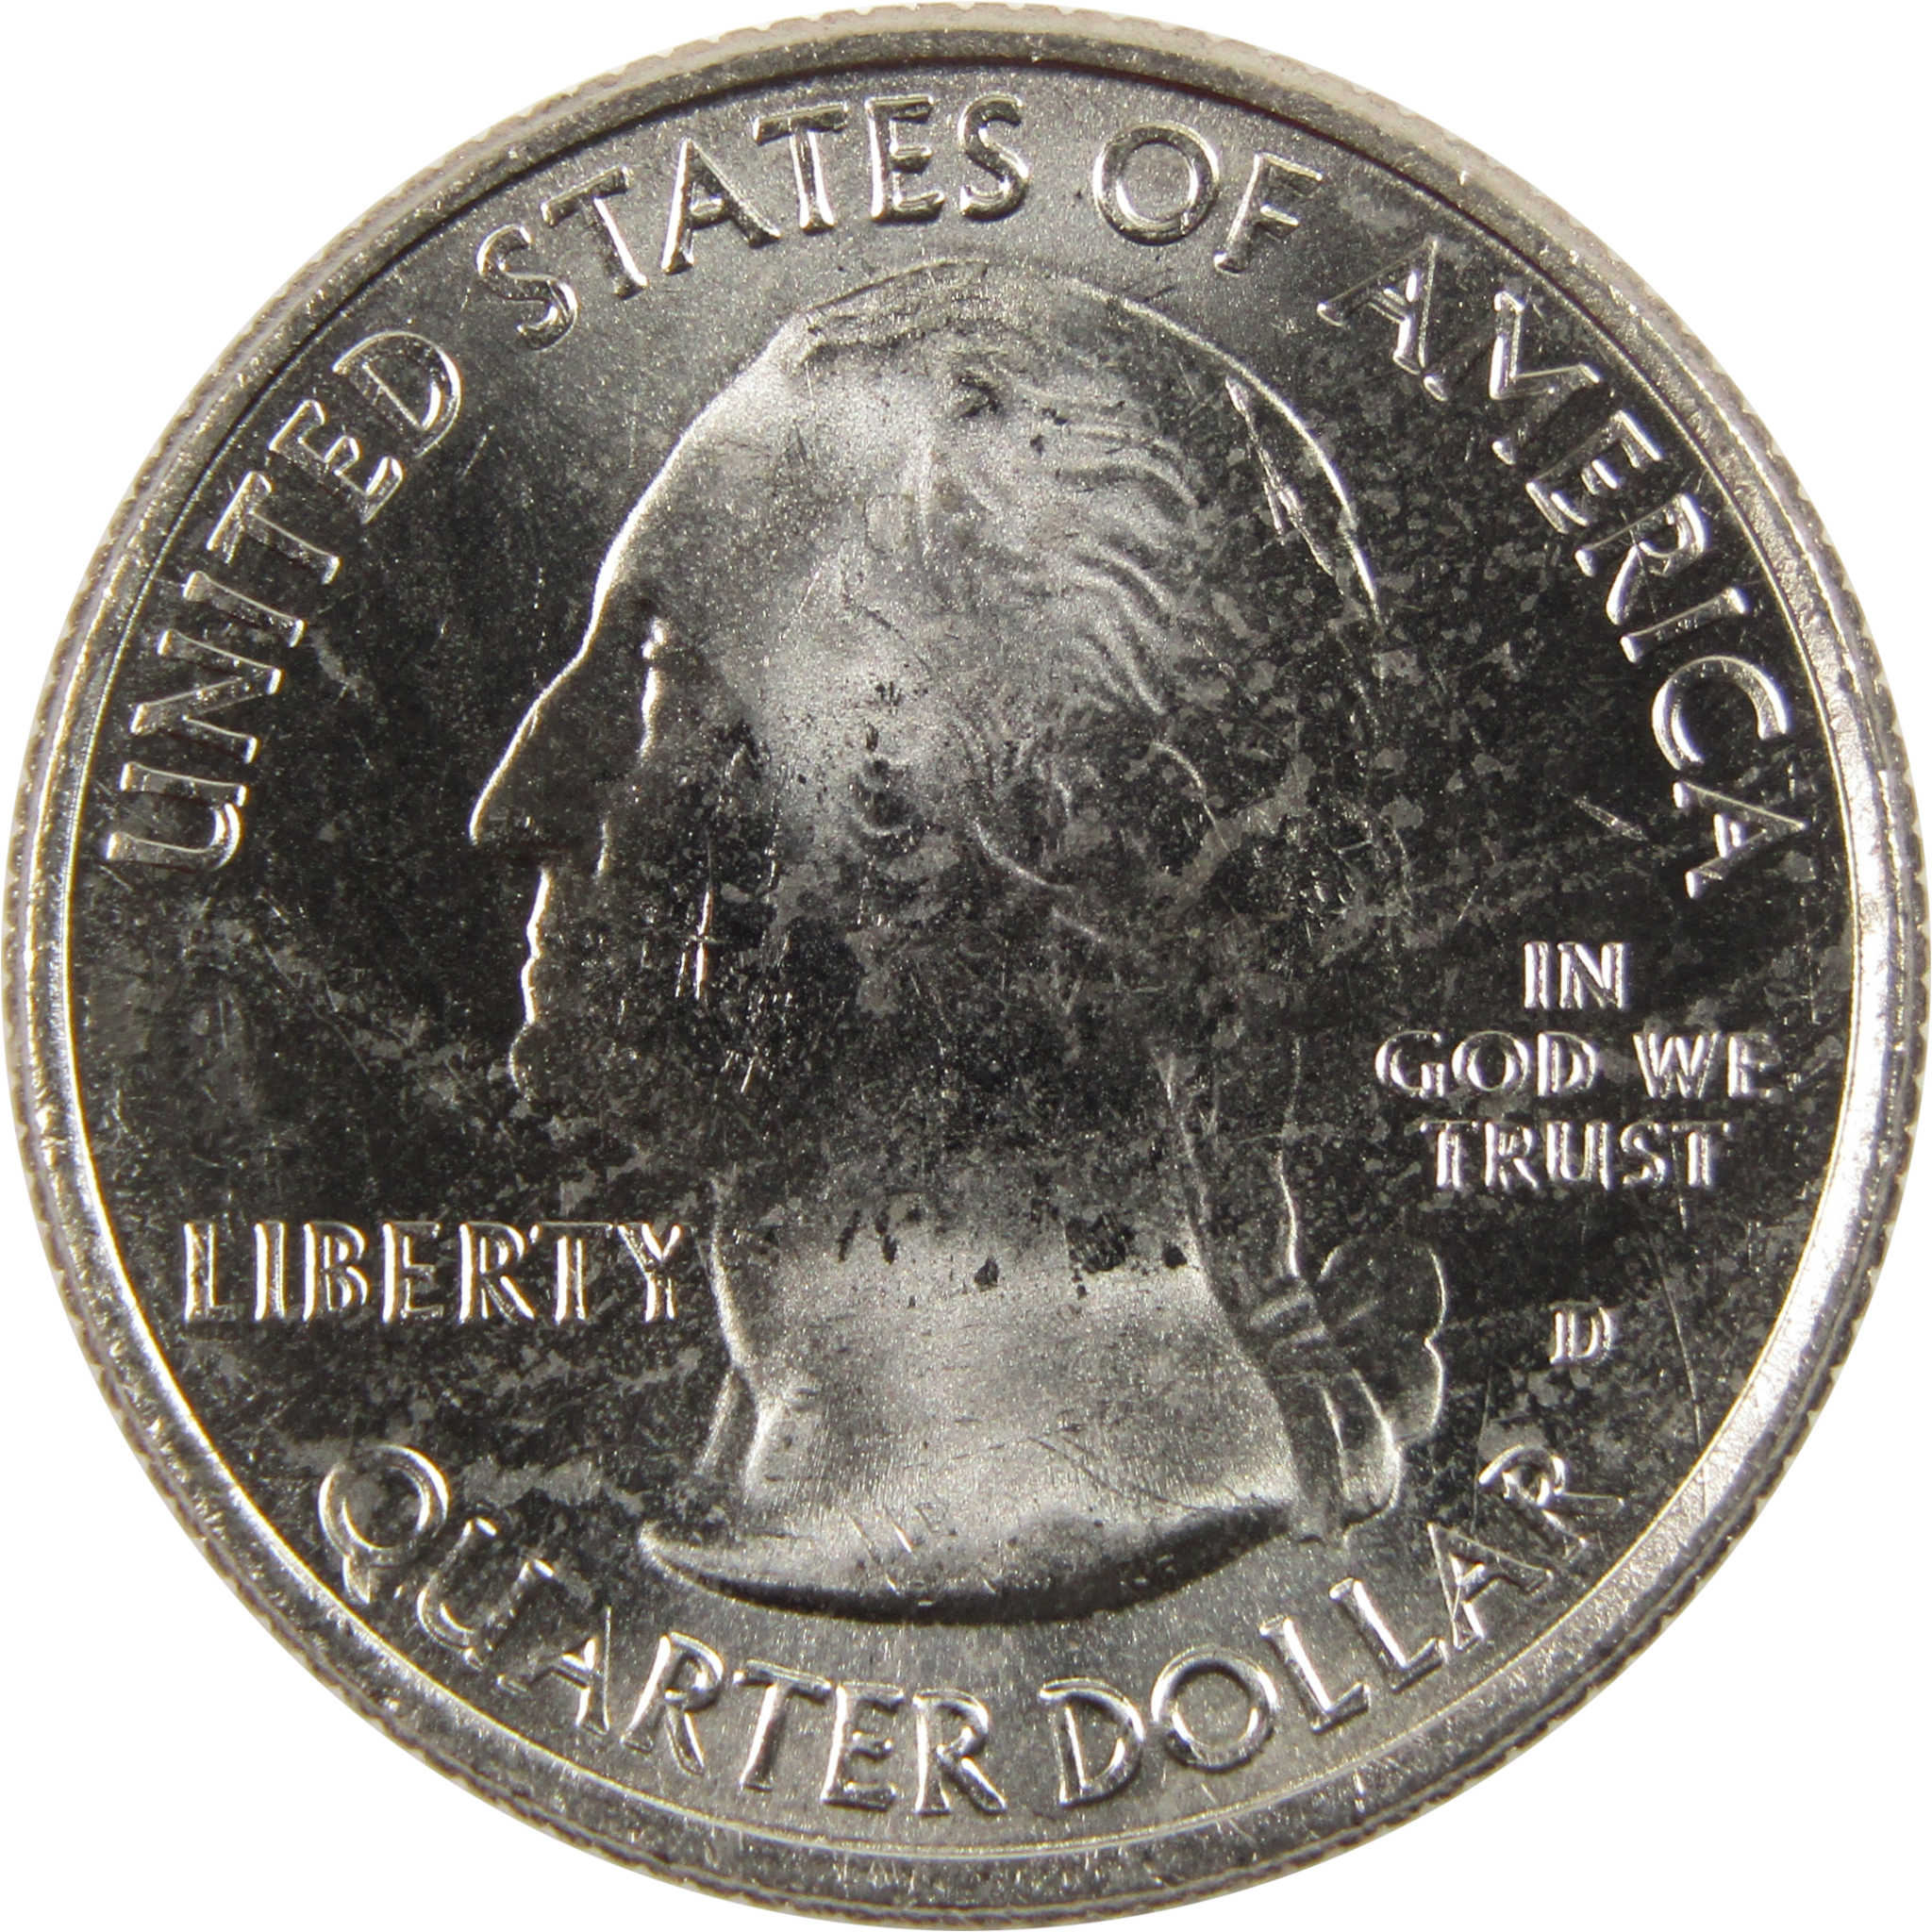 2011 D Glacier National Park Quarter BU Uncirculated Clad 25c Coin